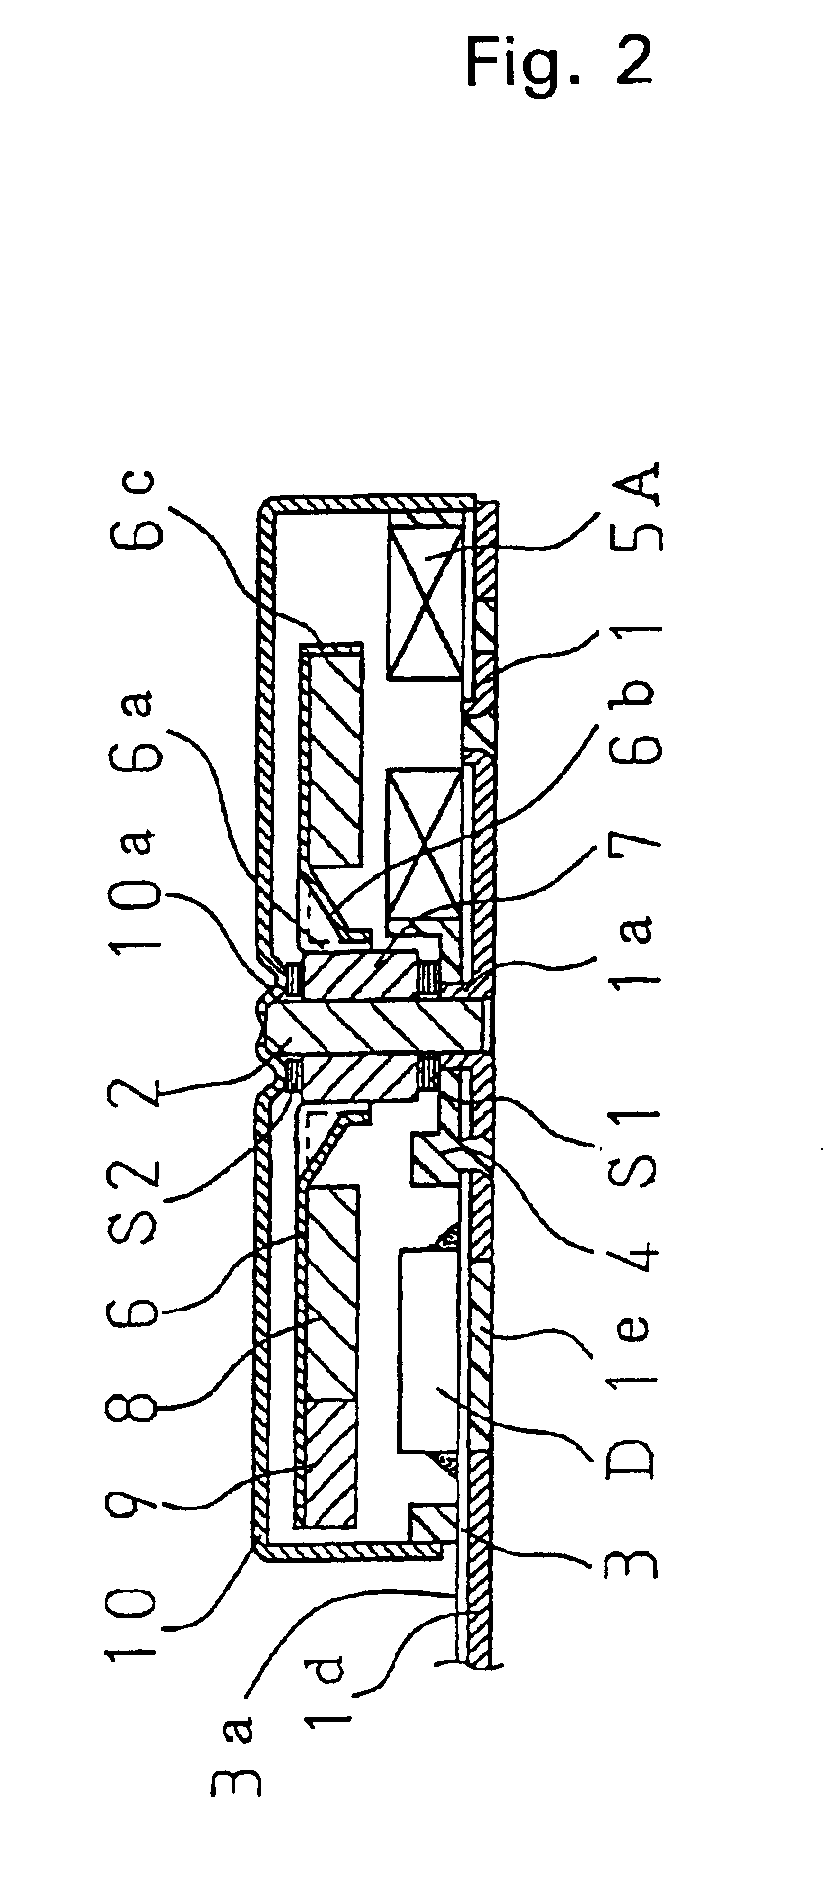 Axial-air-gap brushless vibration motor containing drive circuit